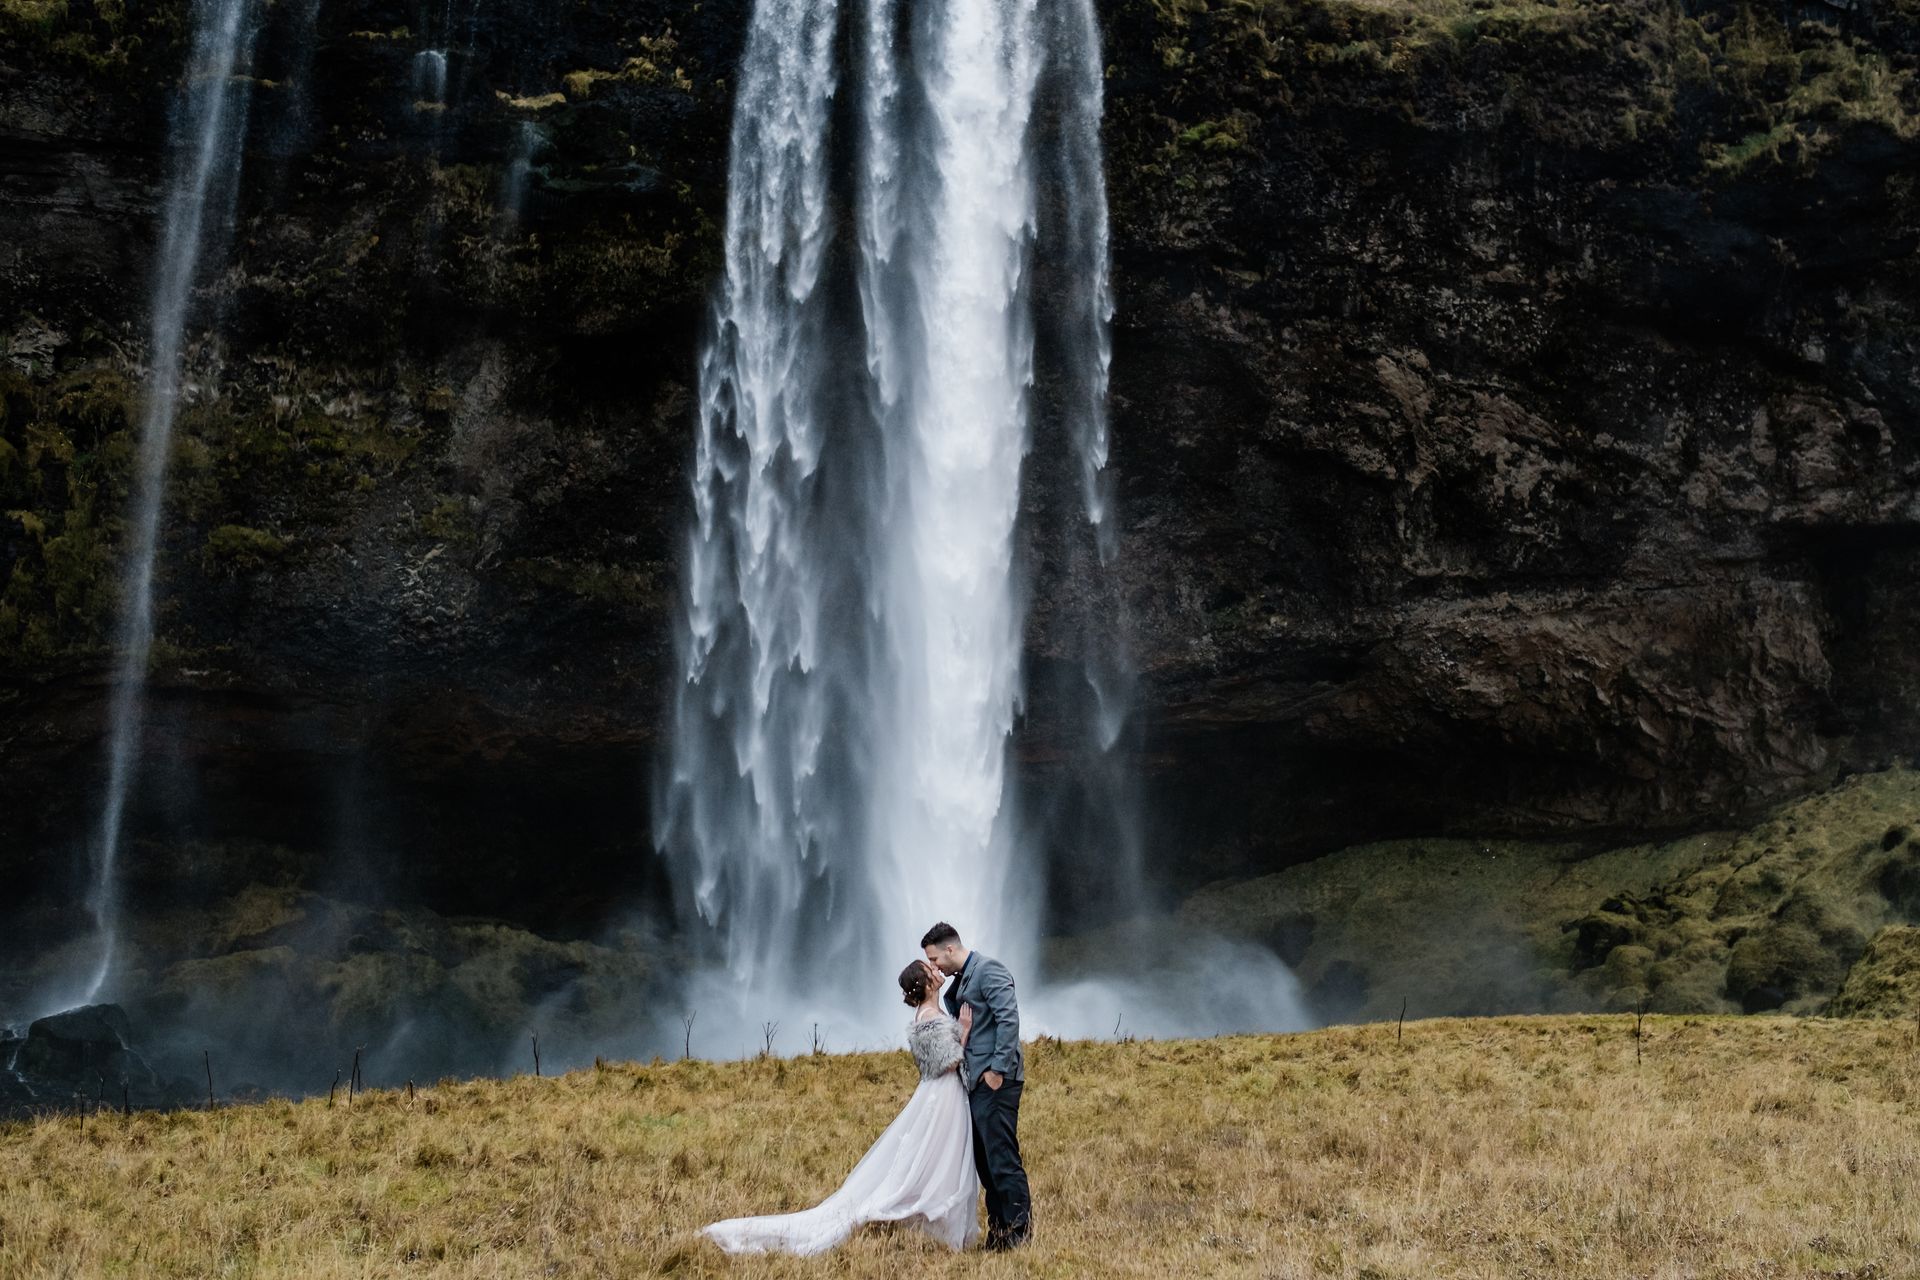 Seljalandsfoss Waterfall in Iceland, Gettin married at Seljalandsfoss Waterfall in Iceland